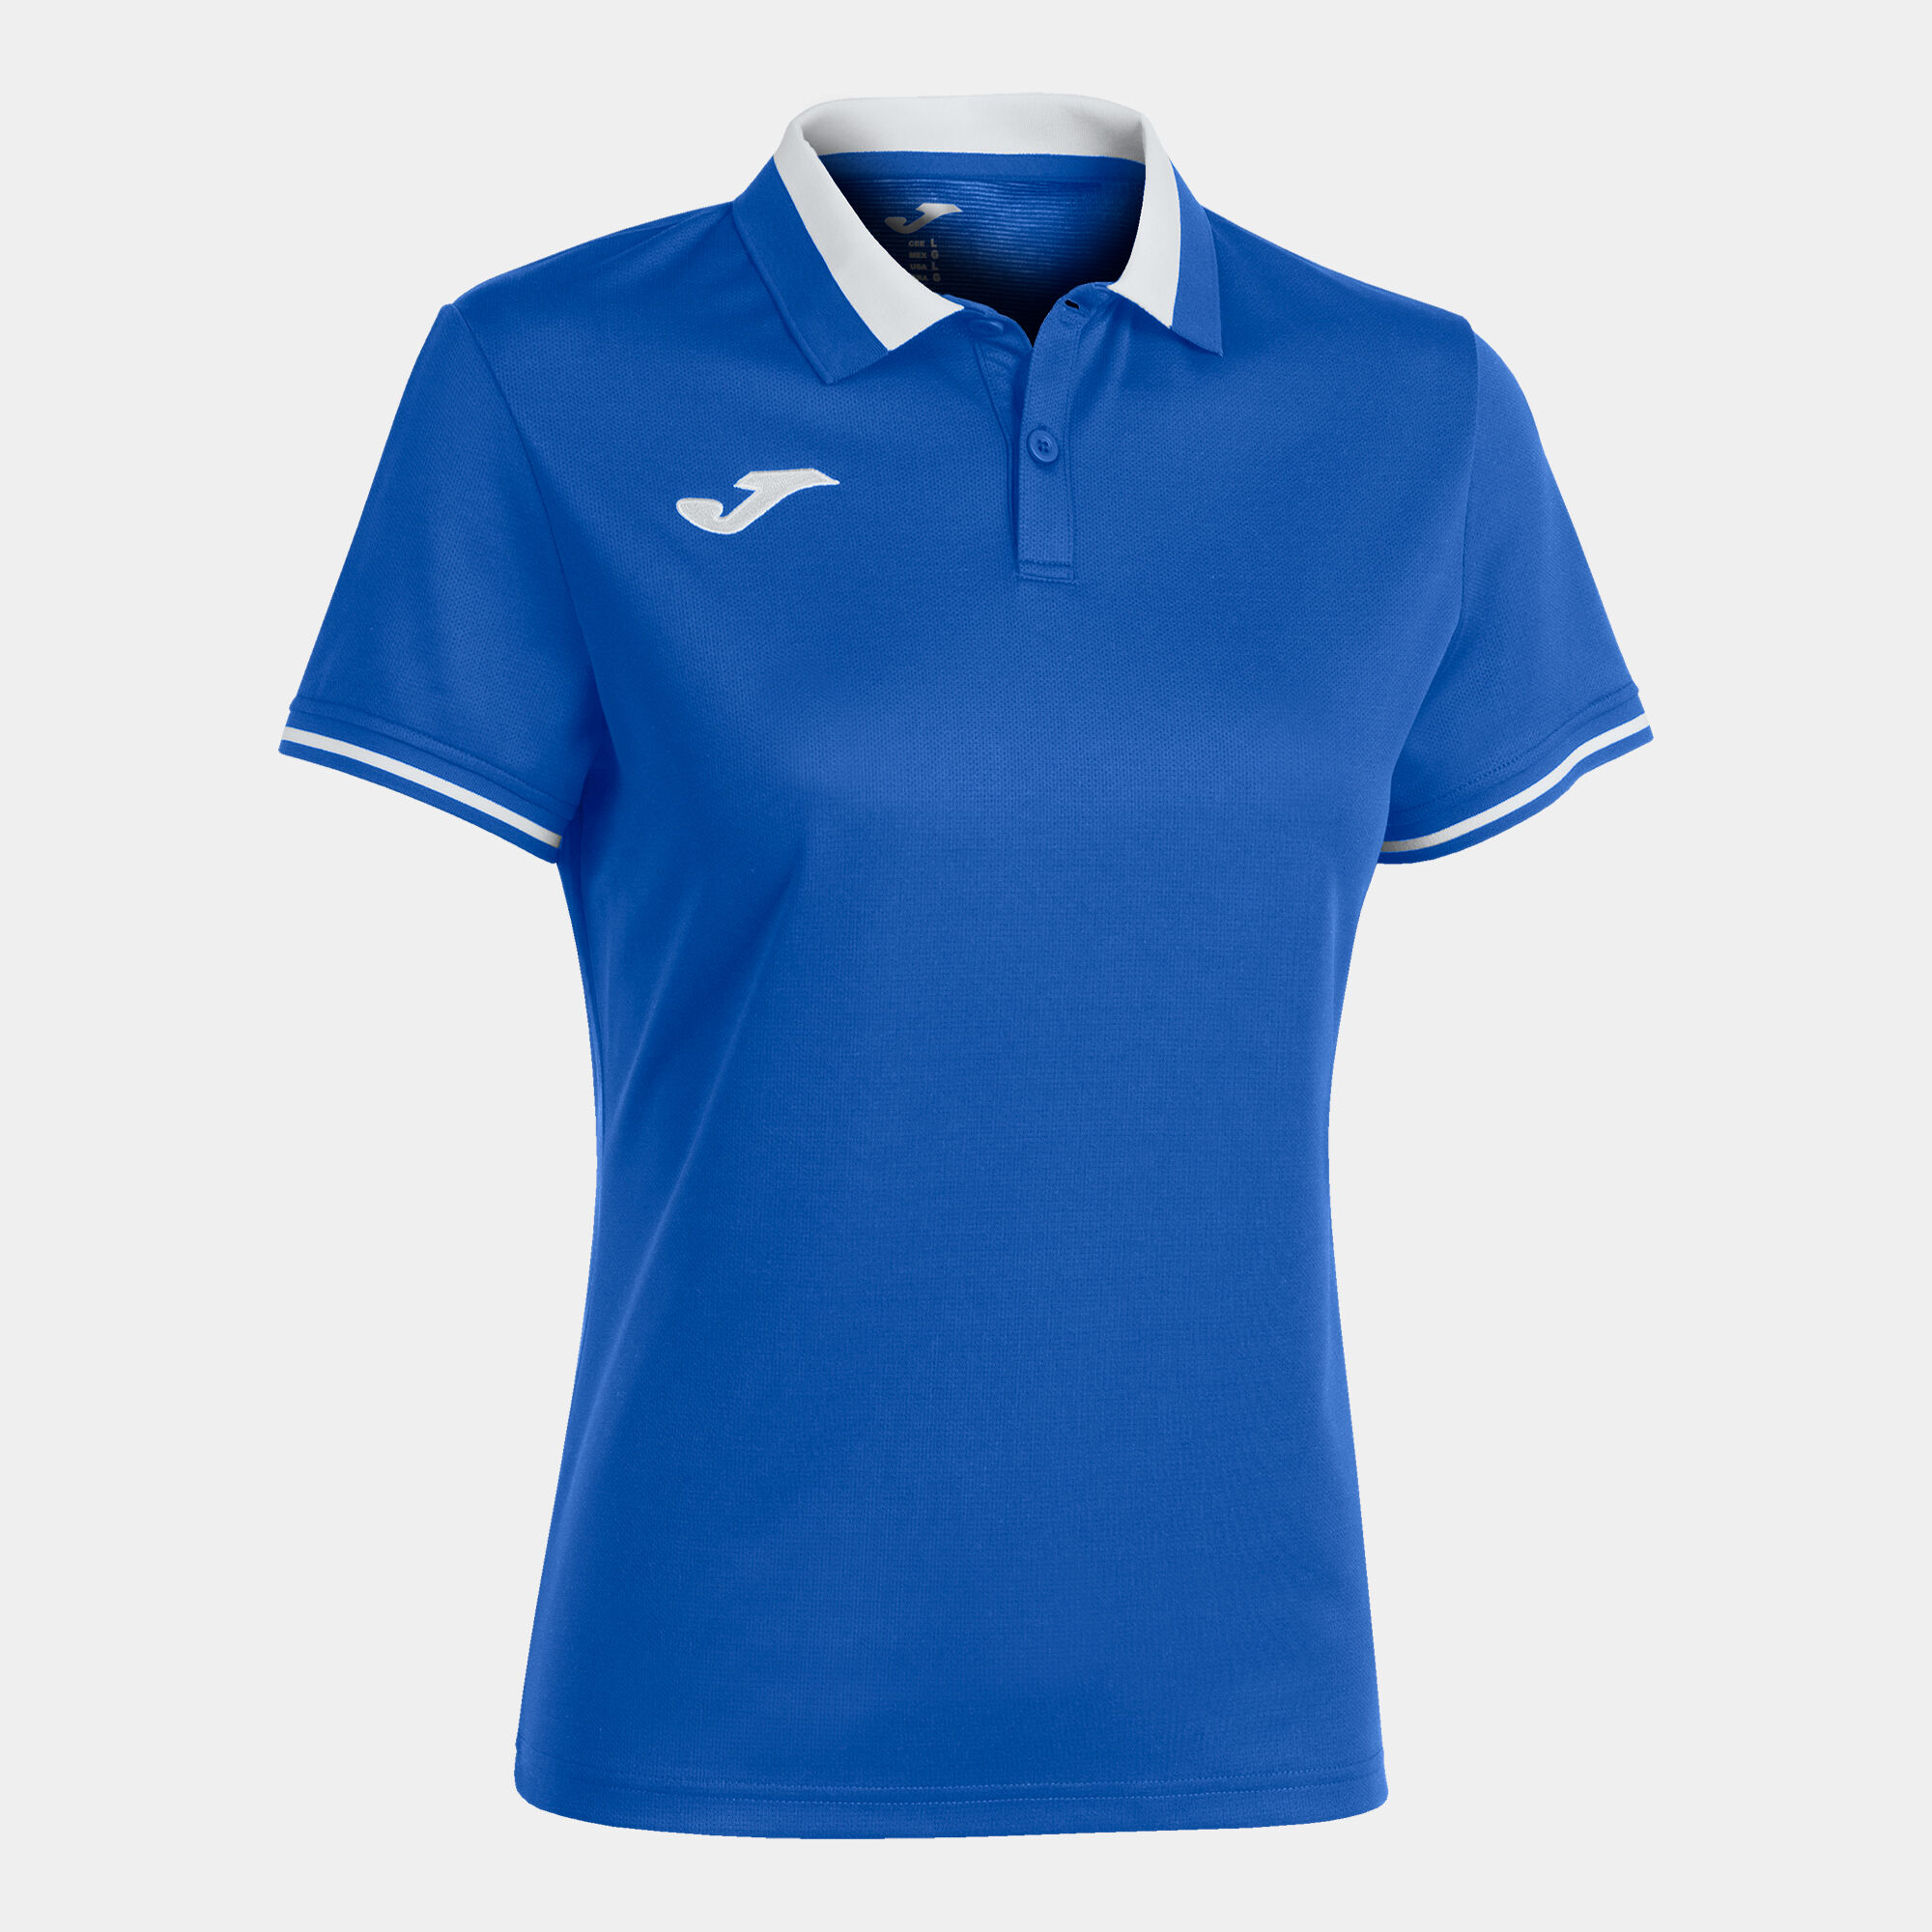 Polo shirt short-sleeve woman Championship VI royal blue white